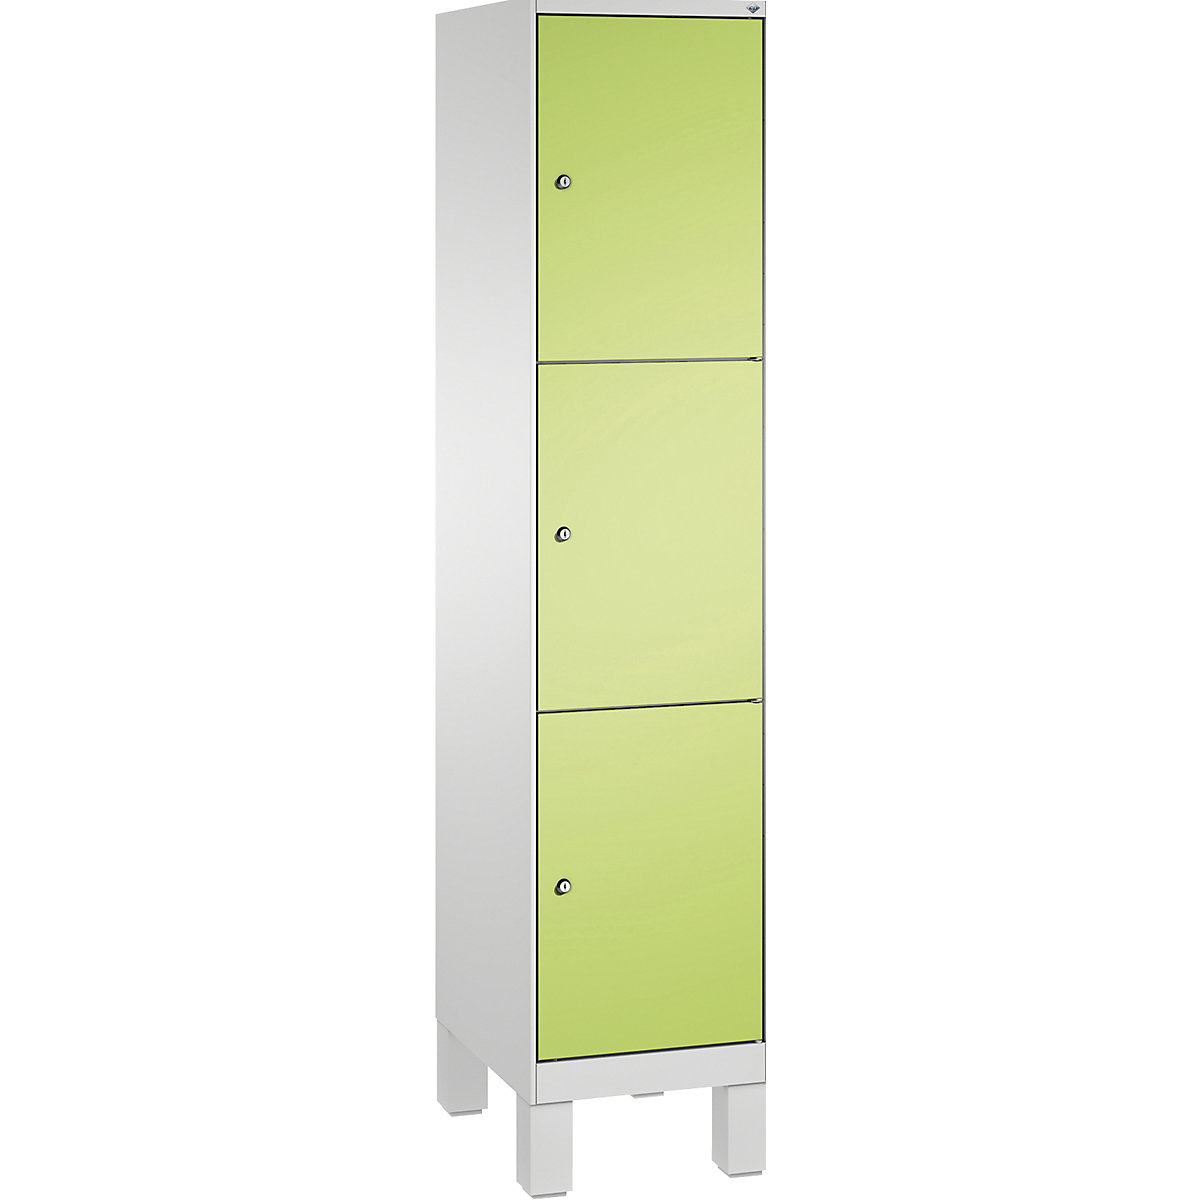 EVOLO locker unit, with feet – C+P, 1 compartment, 3 shelf compartments, compartment width 400 mm, light grey / viridian green